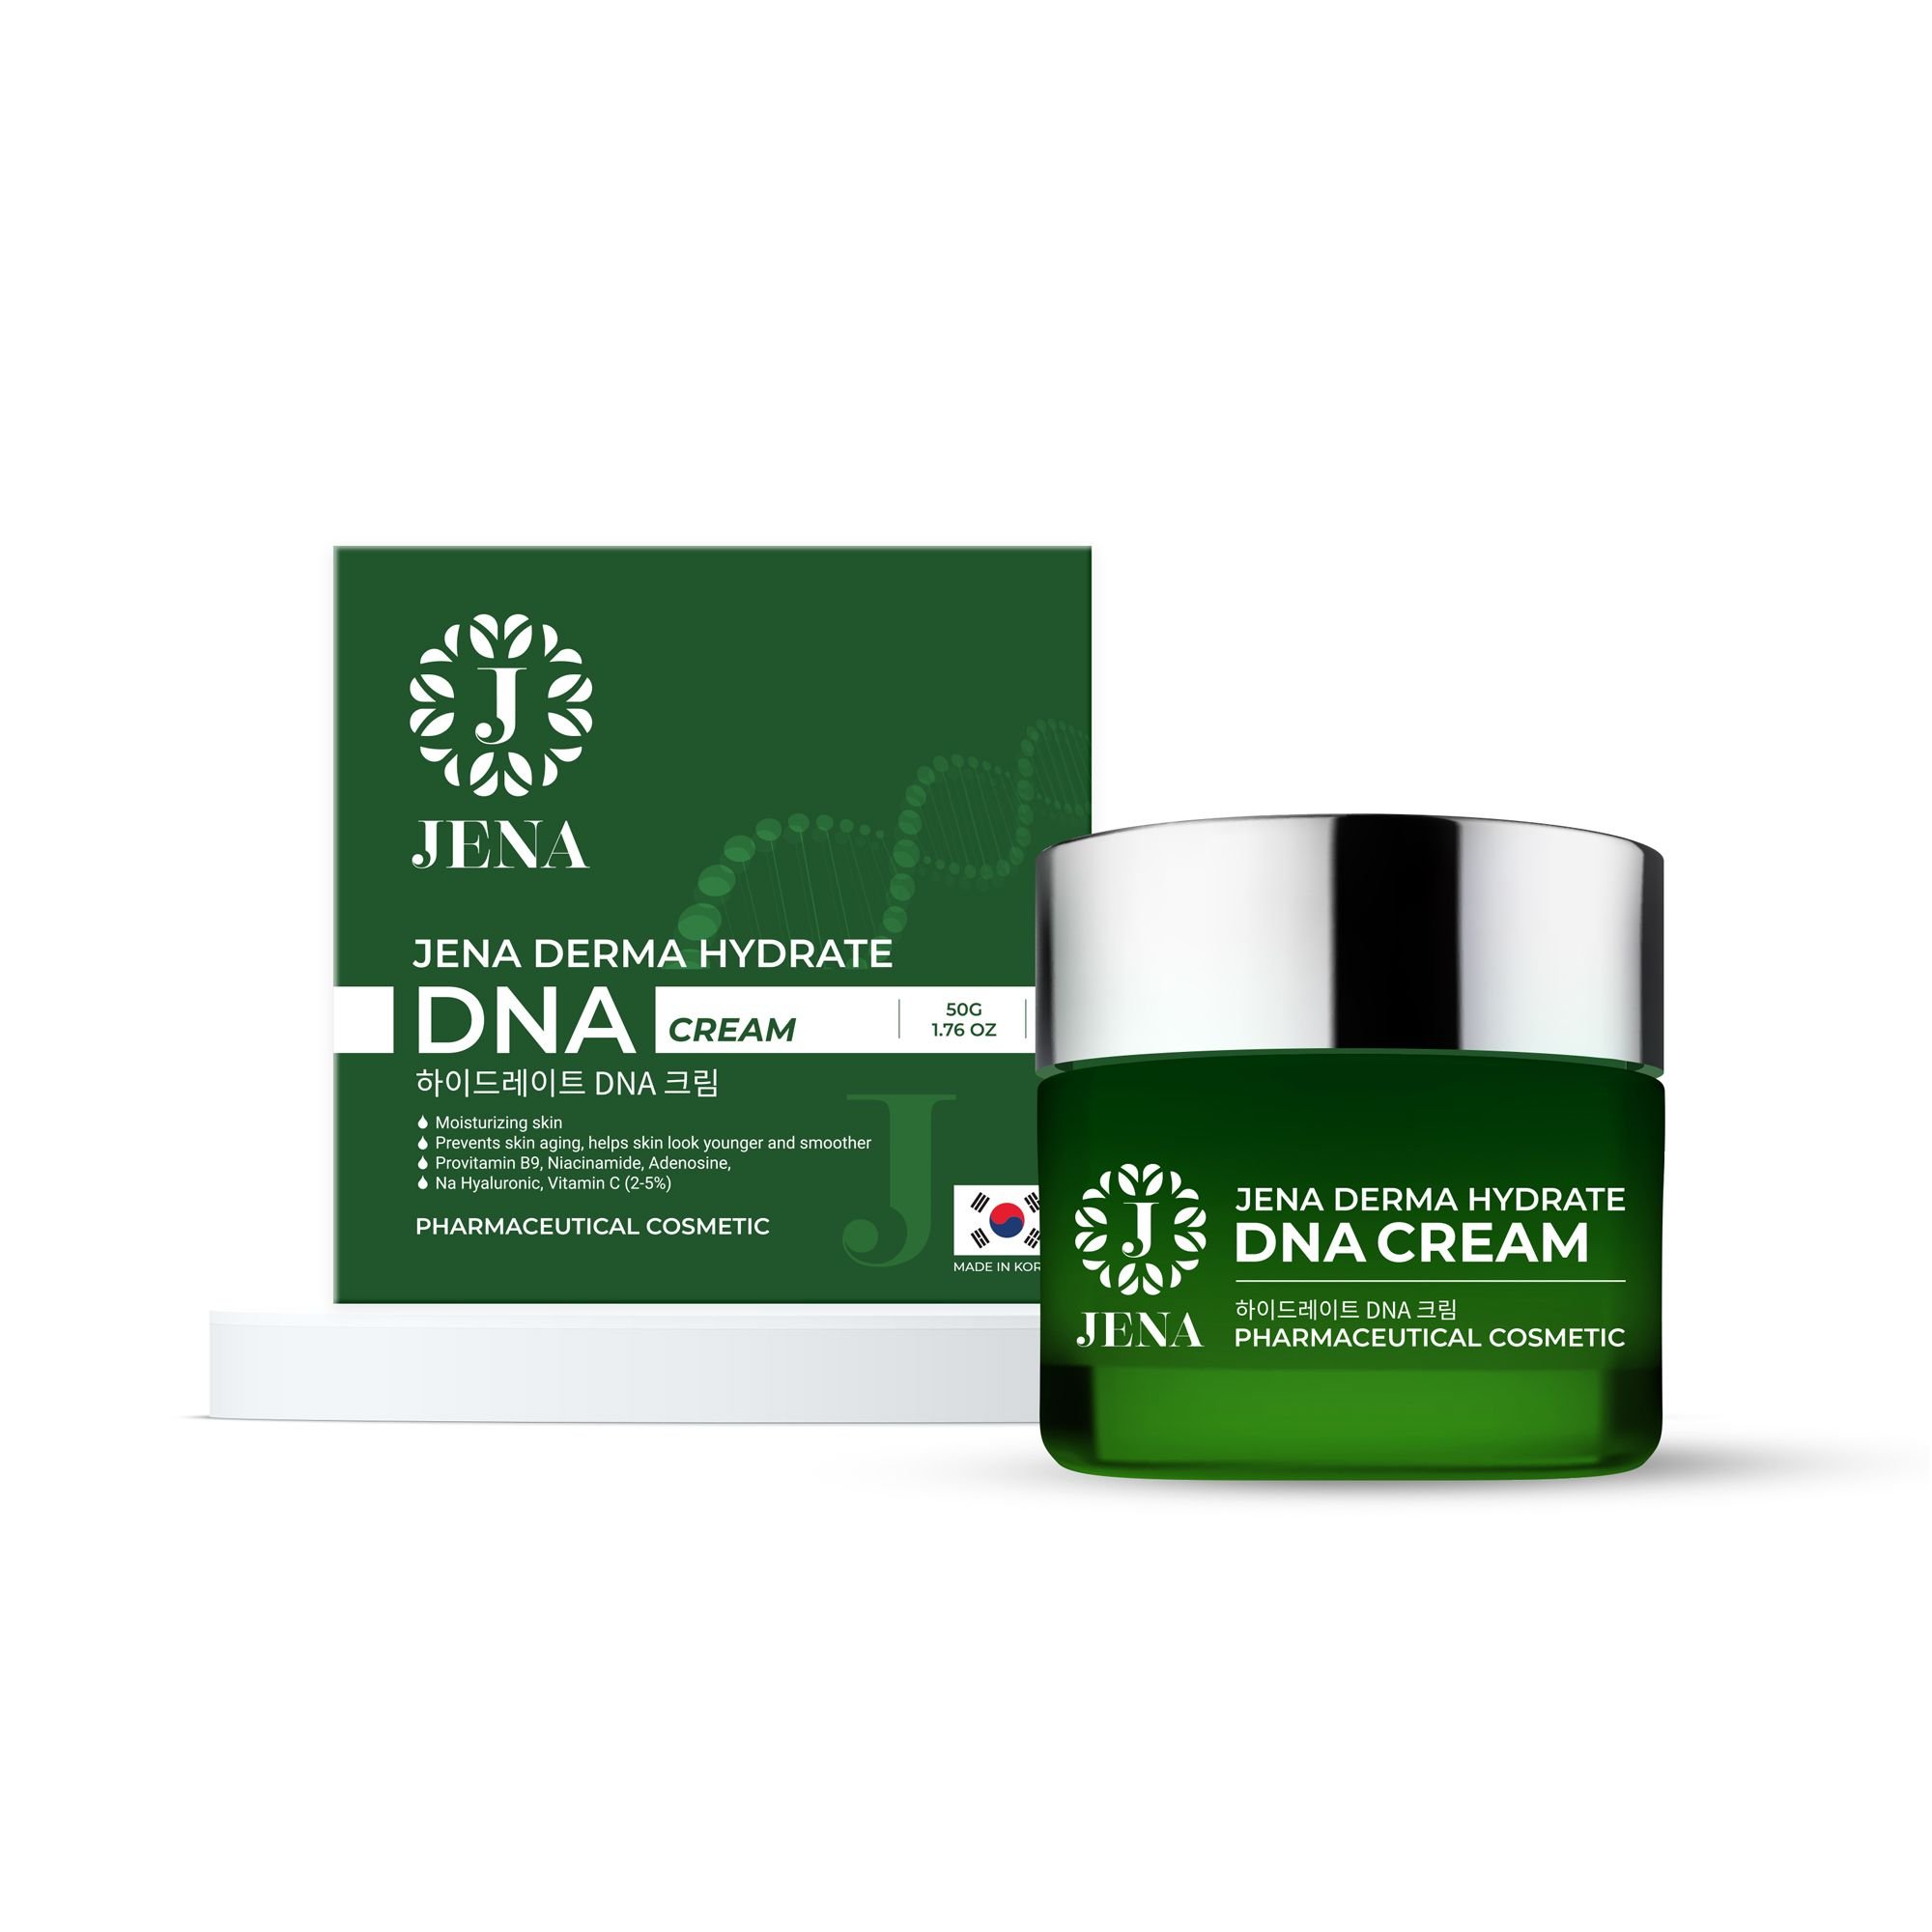  Jena Derma Hydrate DNA Cream - Kem dưỡng DNA TINH THỂ VÀNG Jena 